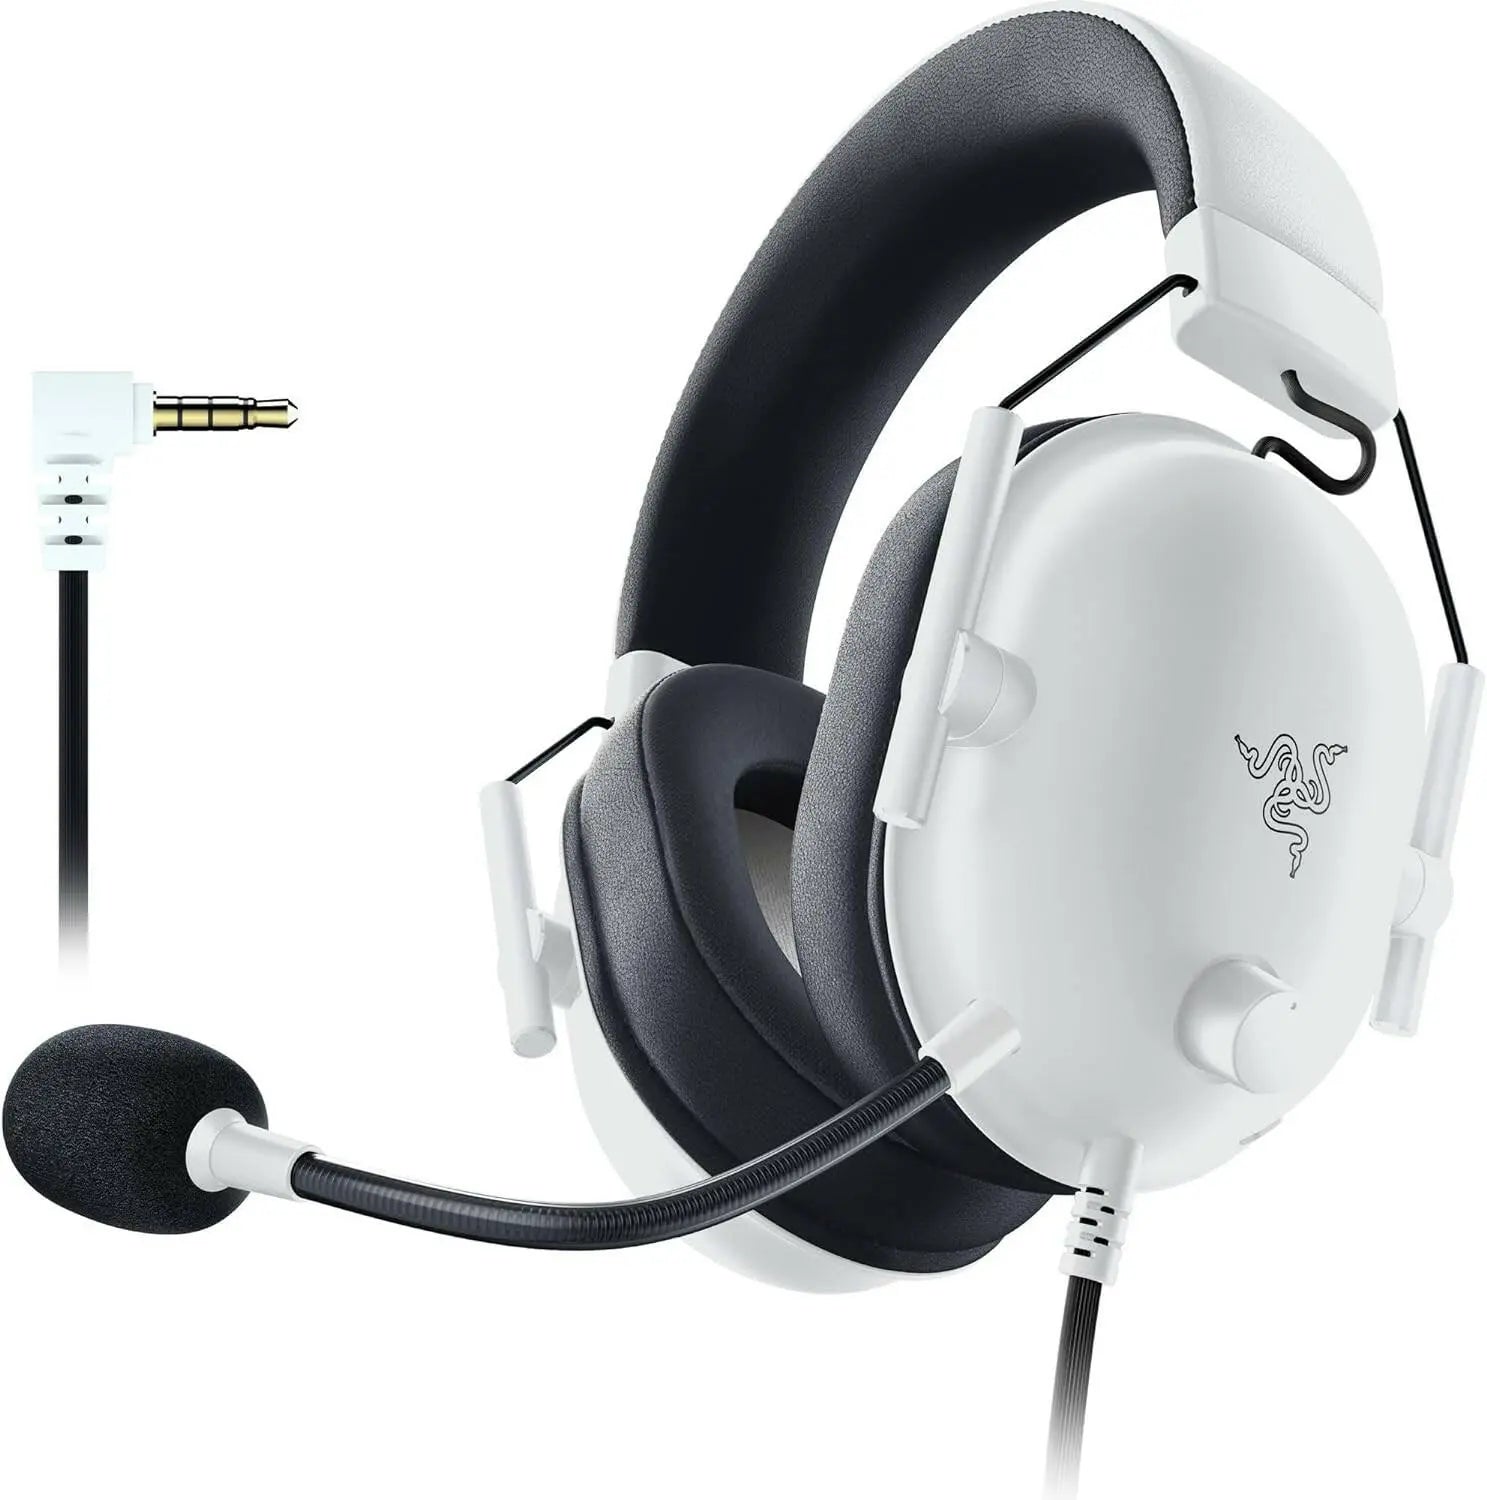 Razer BlackShark V2 X Gaming Headset: 7.1 Surround Sound, 50mm Drivers, Memory Foam Cushion, for PC, PS4, PS5, Switch, Xbox One, Xbox Series X|S